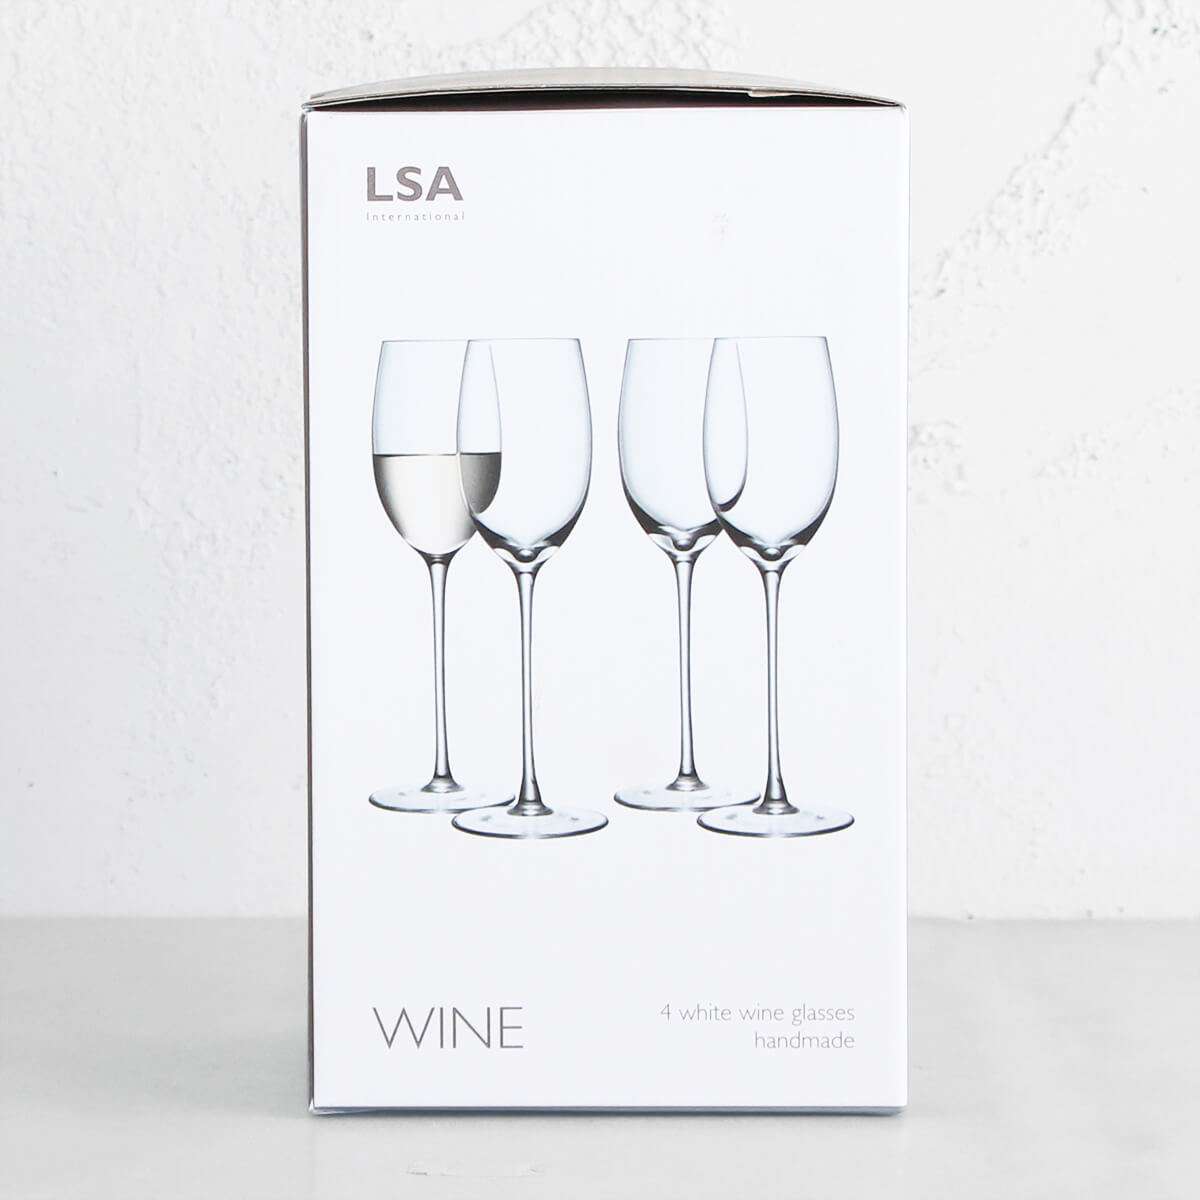 LSA International Set of 6 Borough Wine Glasses (450ml)